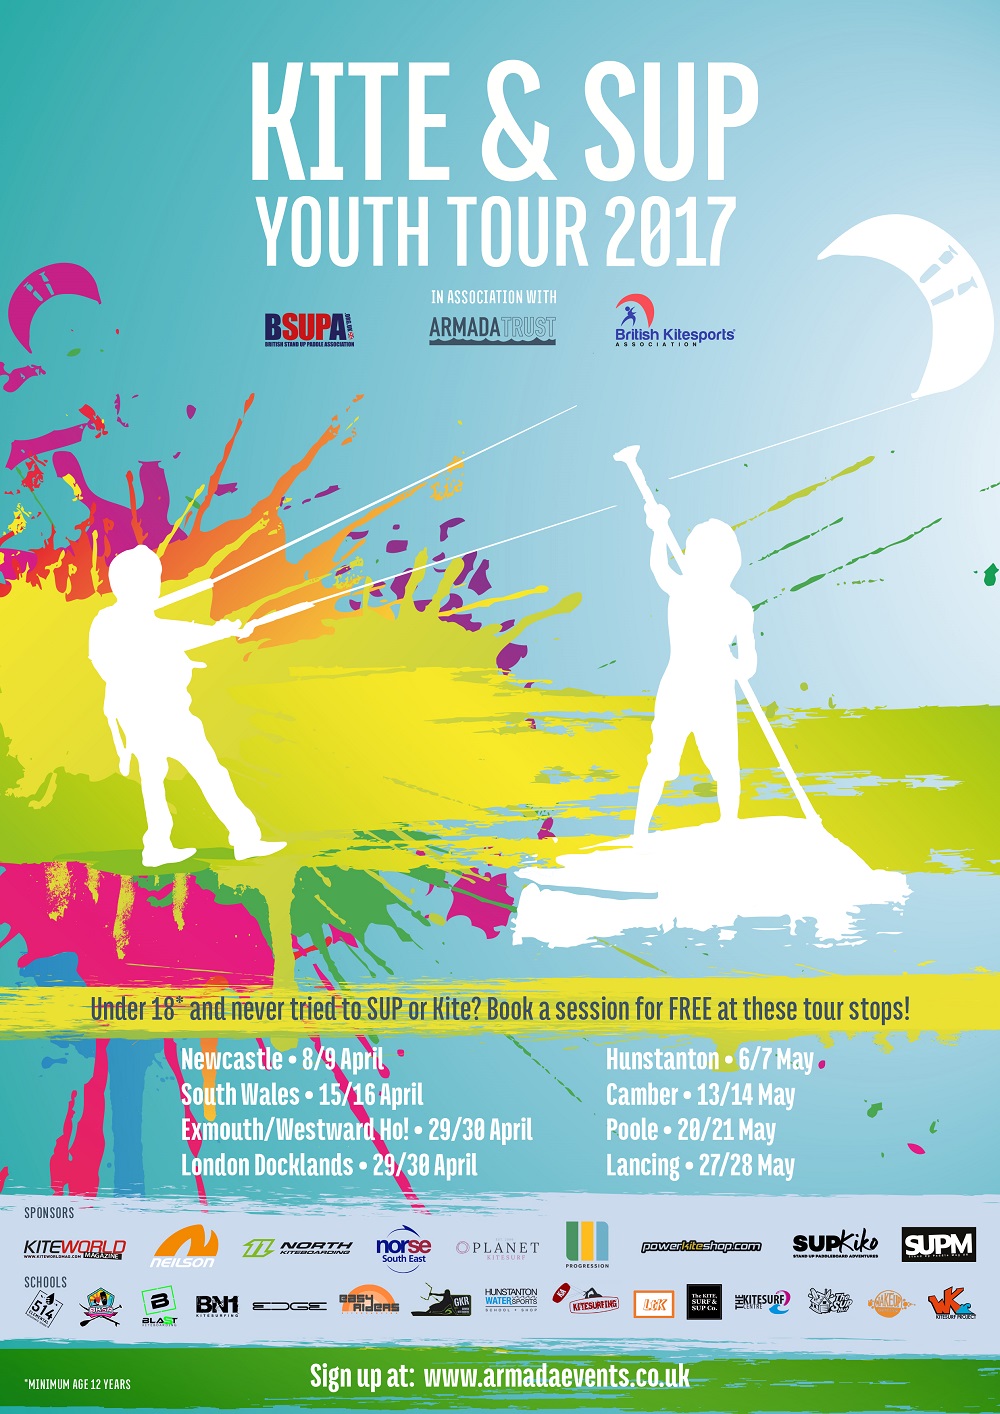 Kite & SUP Youth Tour